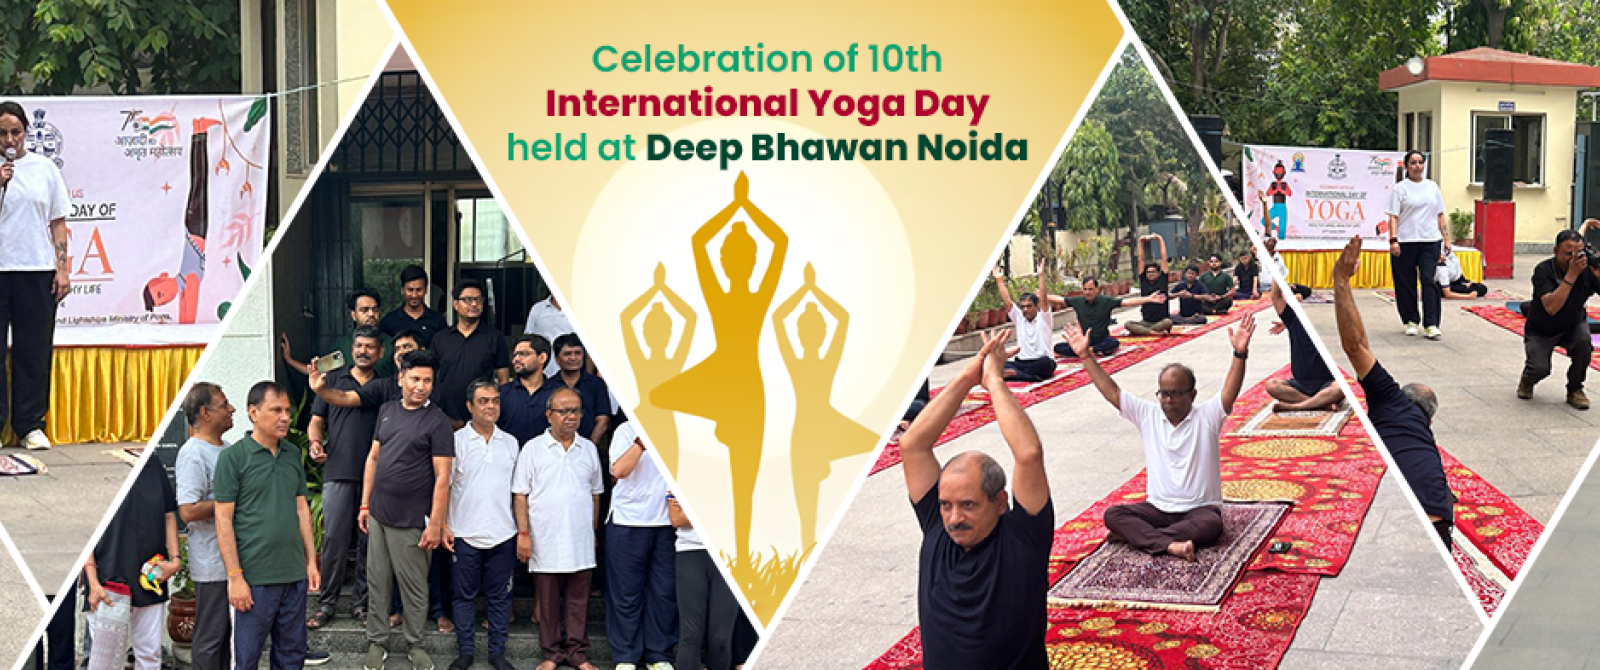 Celebration of 10th International Yoga Day Held of Deep Bhawan Noida